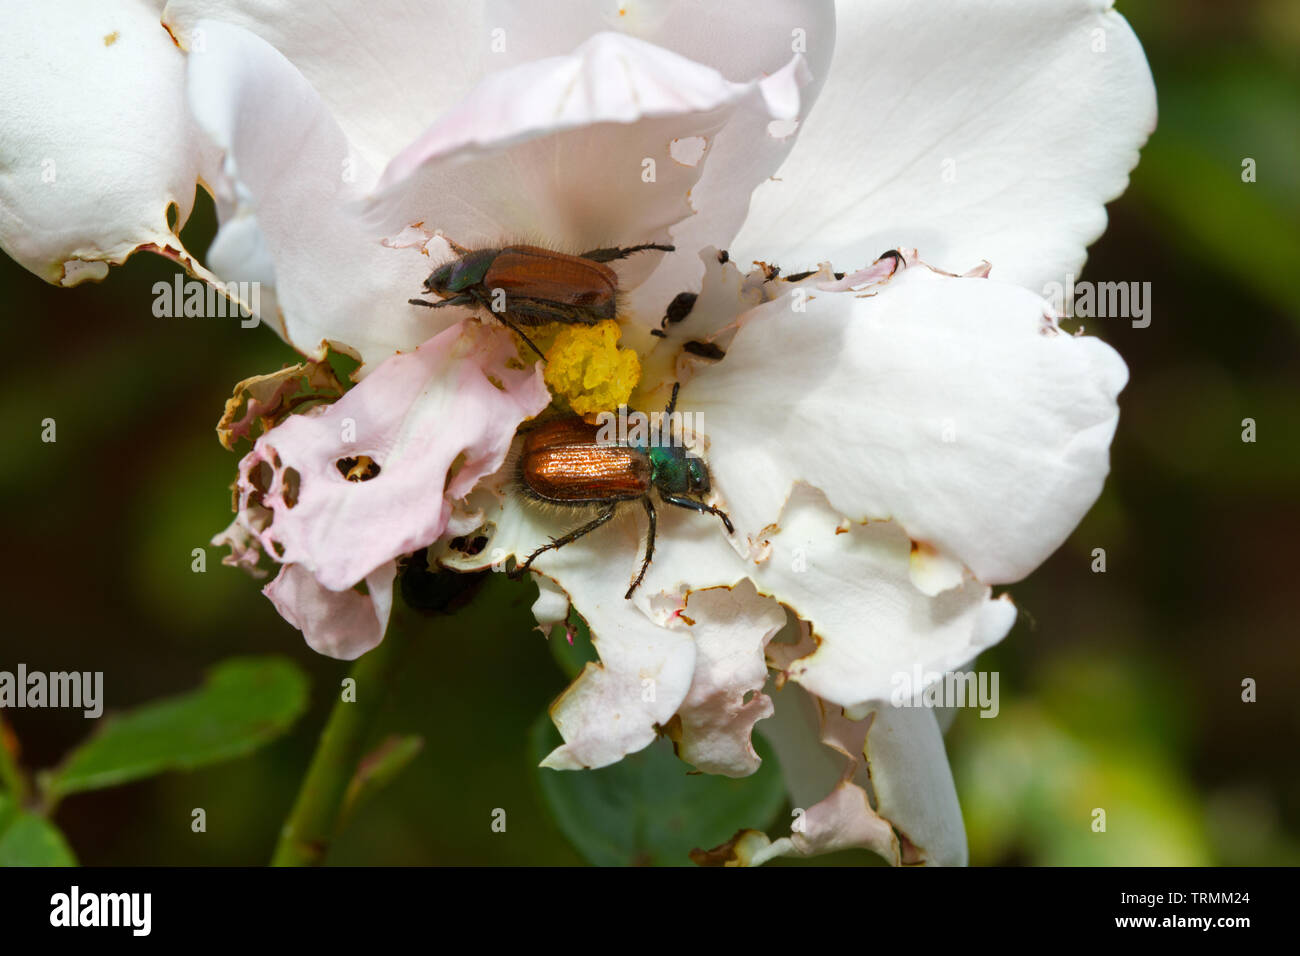 Garden Chafers, also known as Garden Foliage Beetles, damaging white rose petals Stock Photo